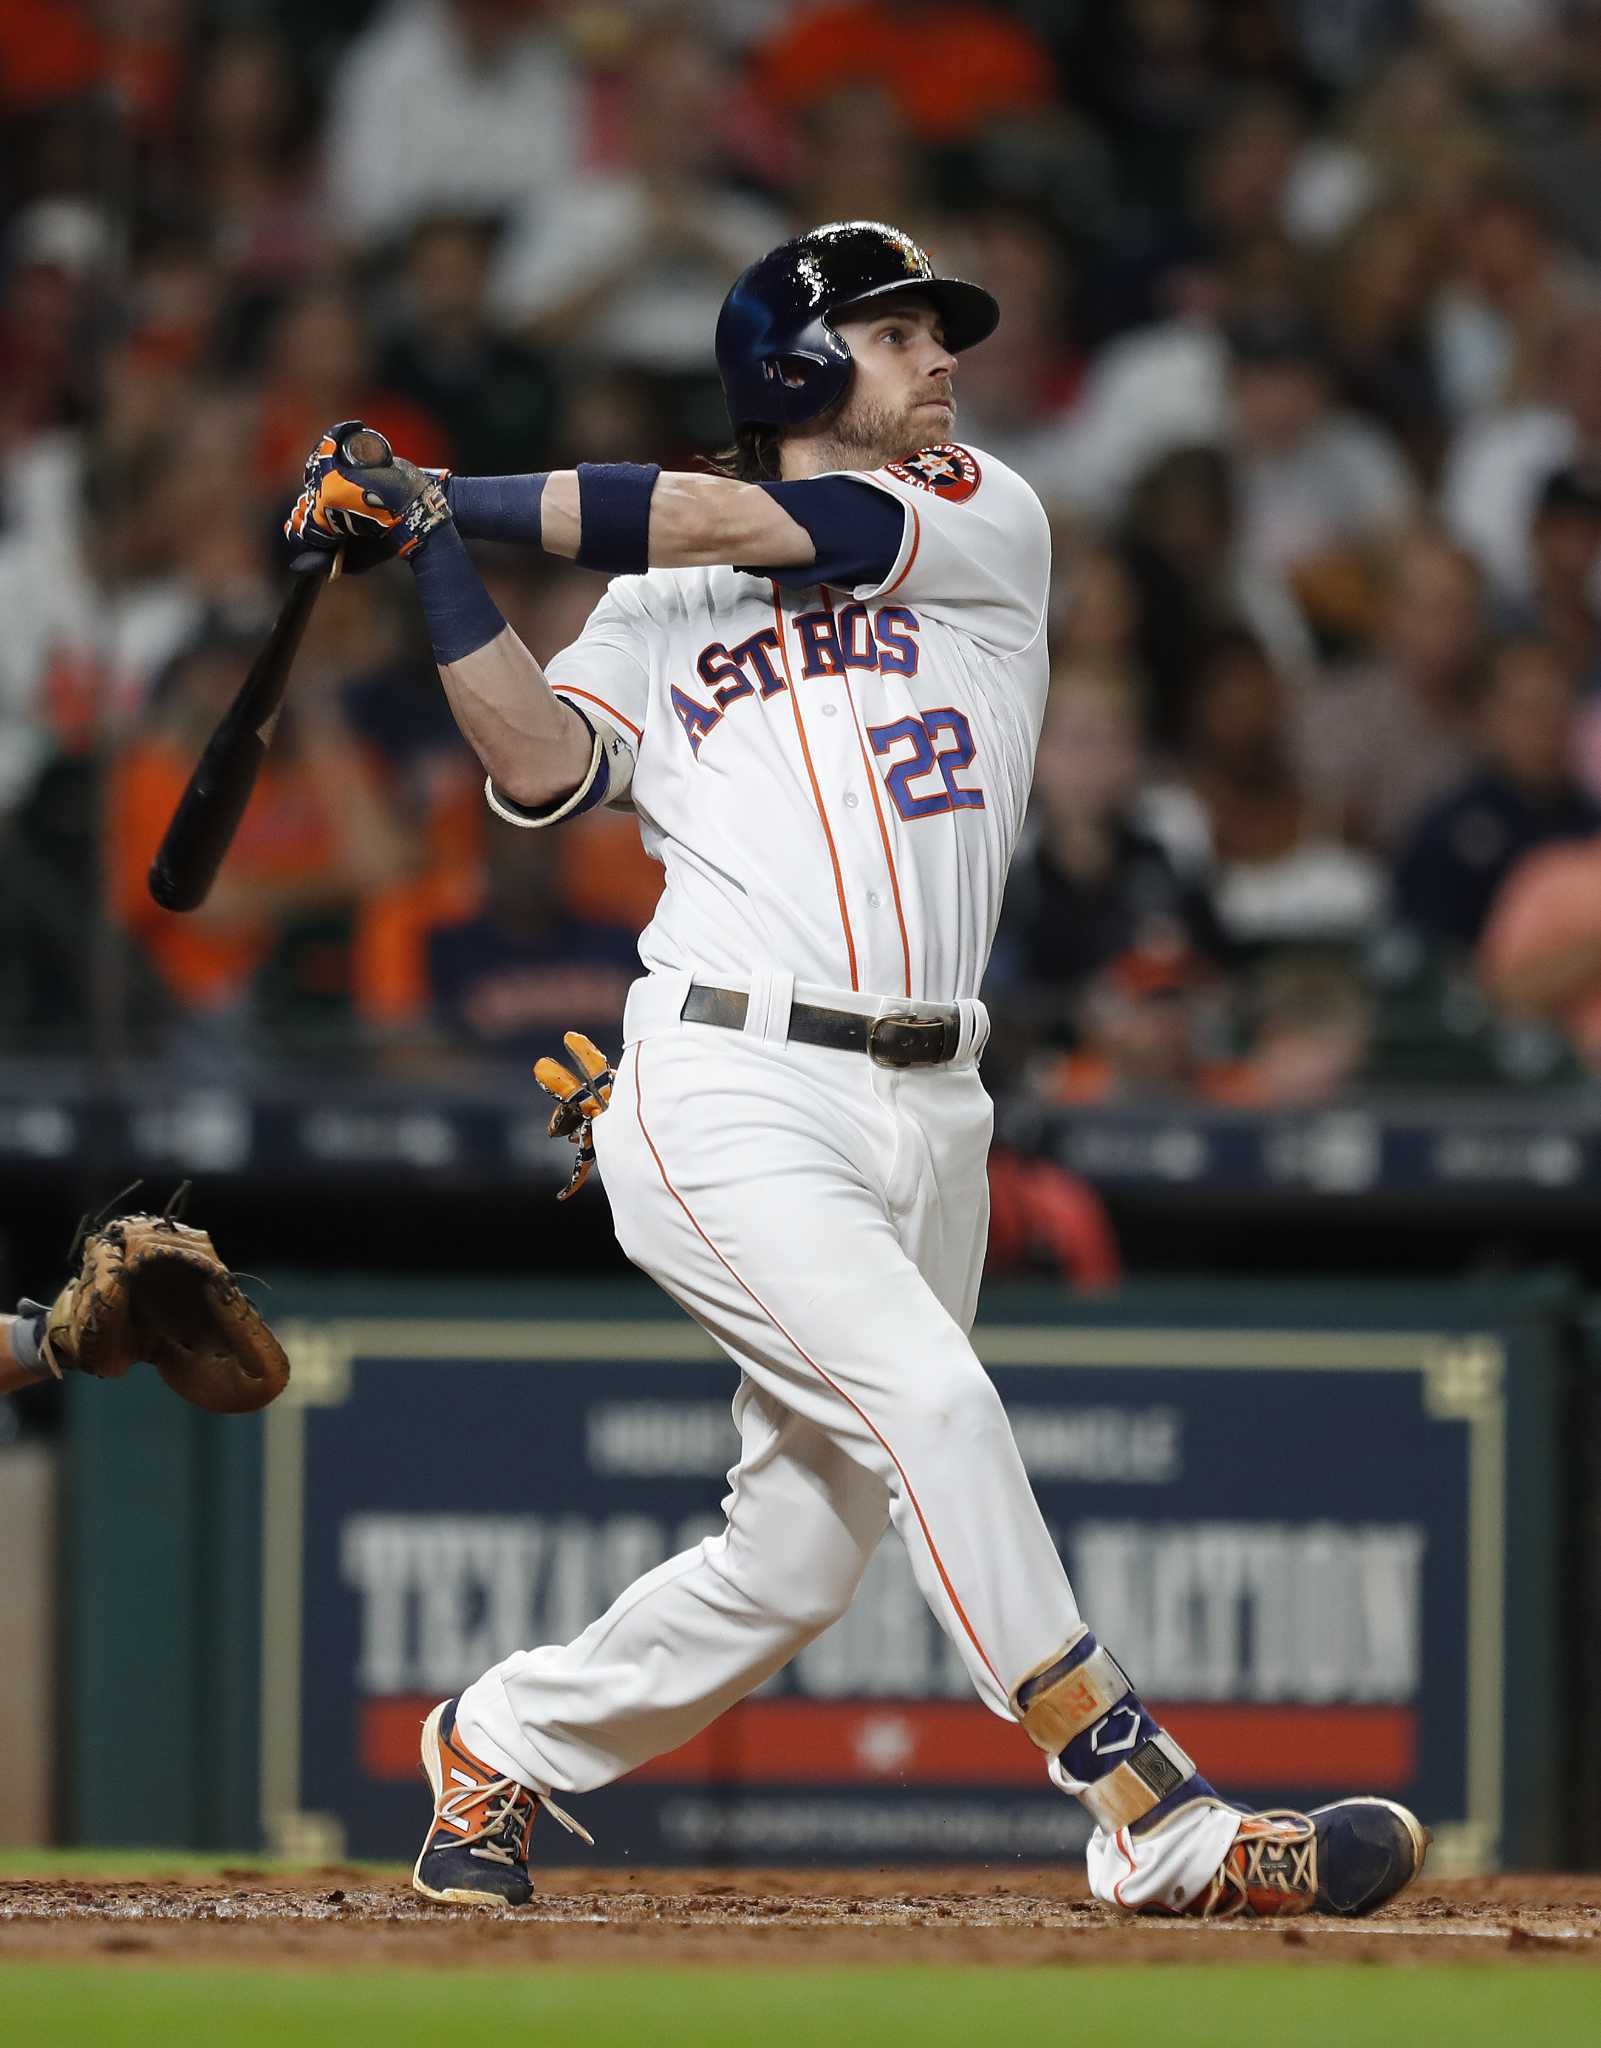 WATCH: Baseball player Josh Reddick celebrates Astros victory in  star-spangled Speedo - Queerty